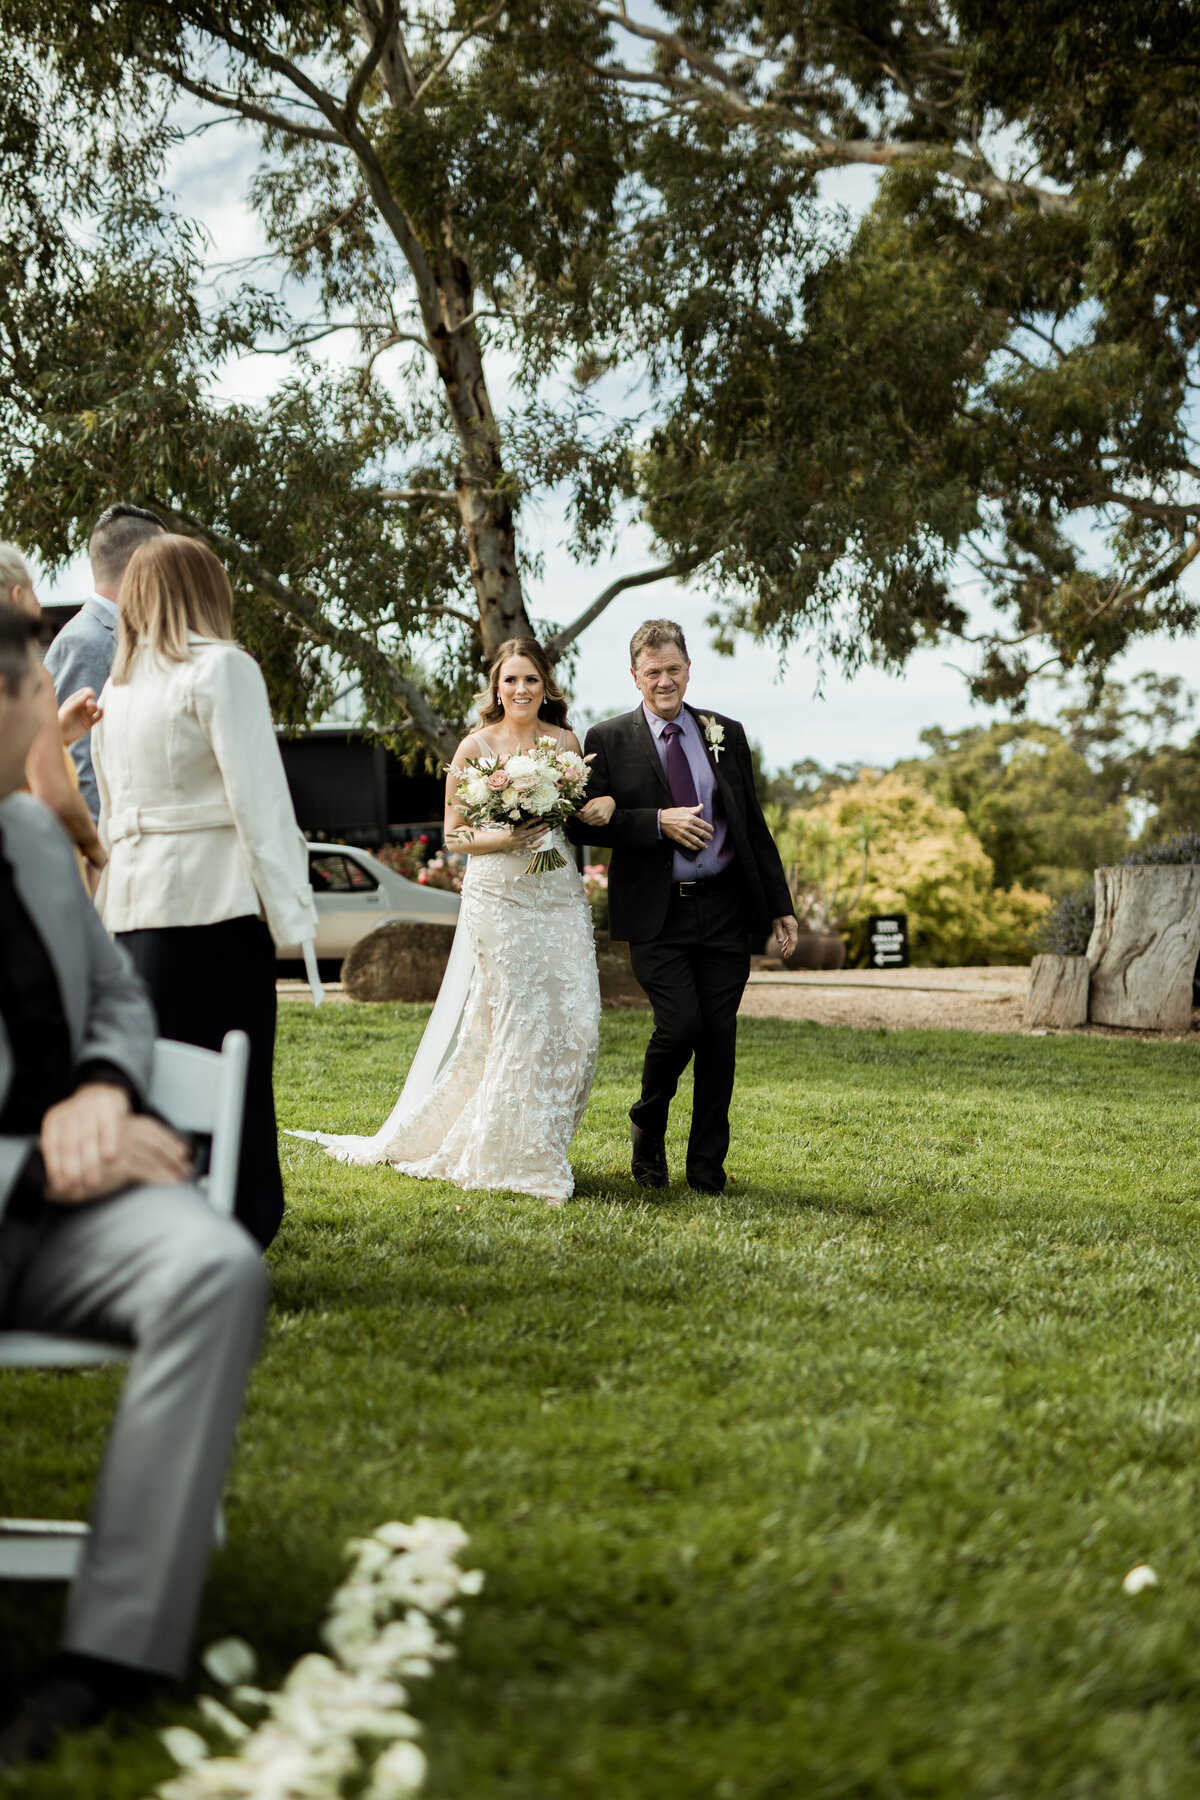 Sam-Scott-Rexvil-Photography-Adelaide-Wedding-Photographer-272